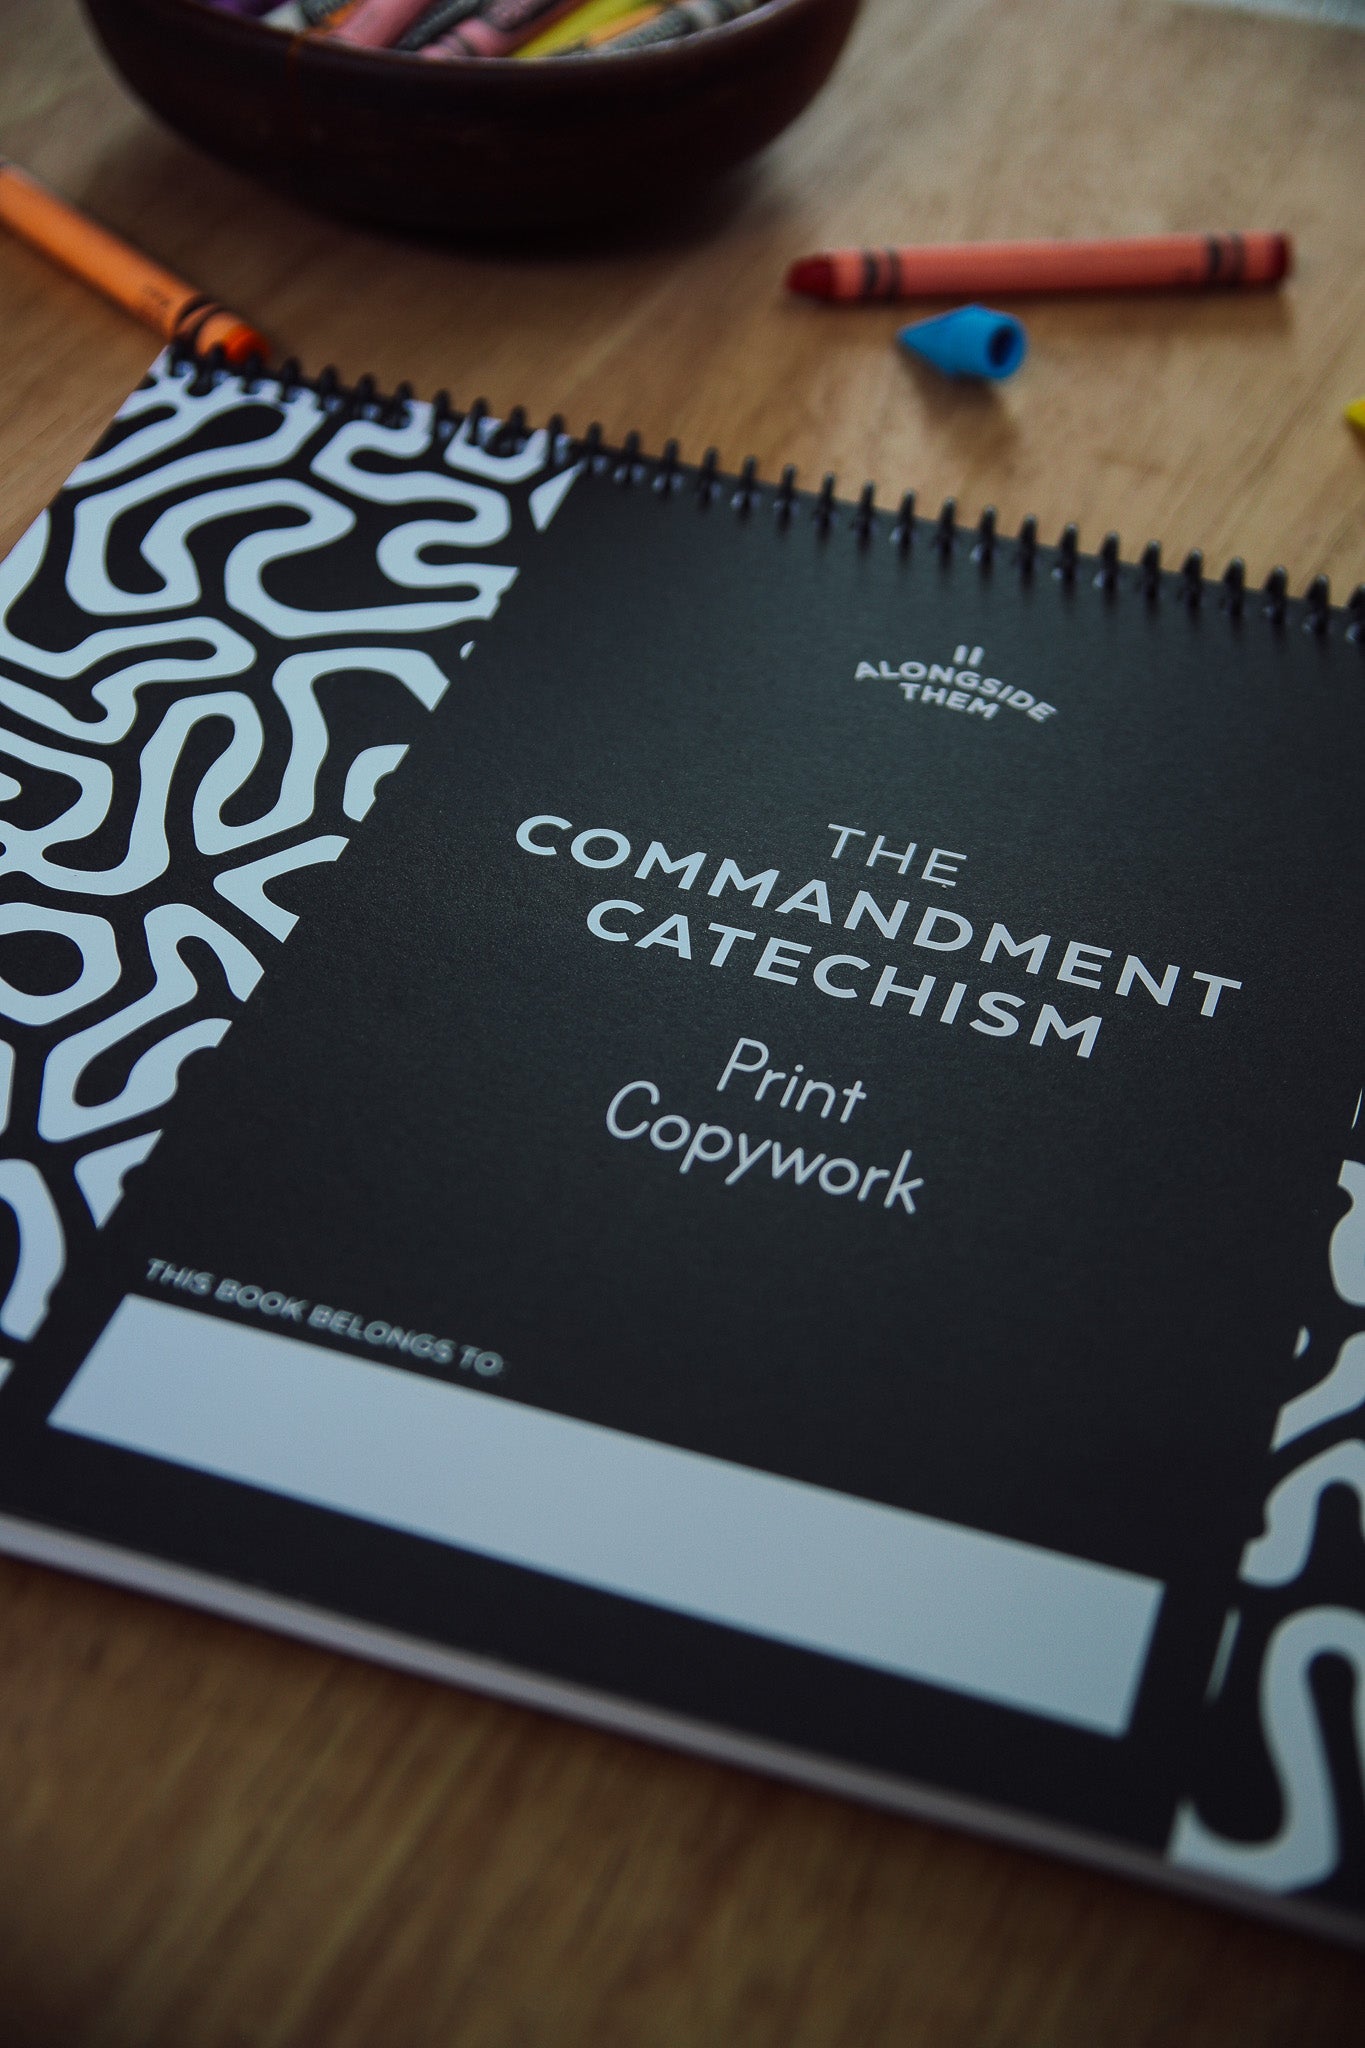 The Commandment Catechism Print Copywork